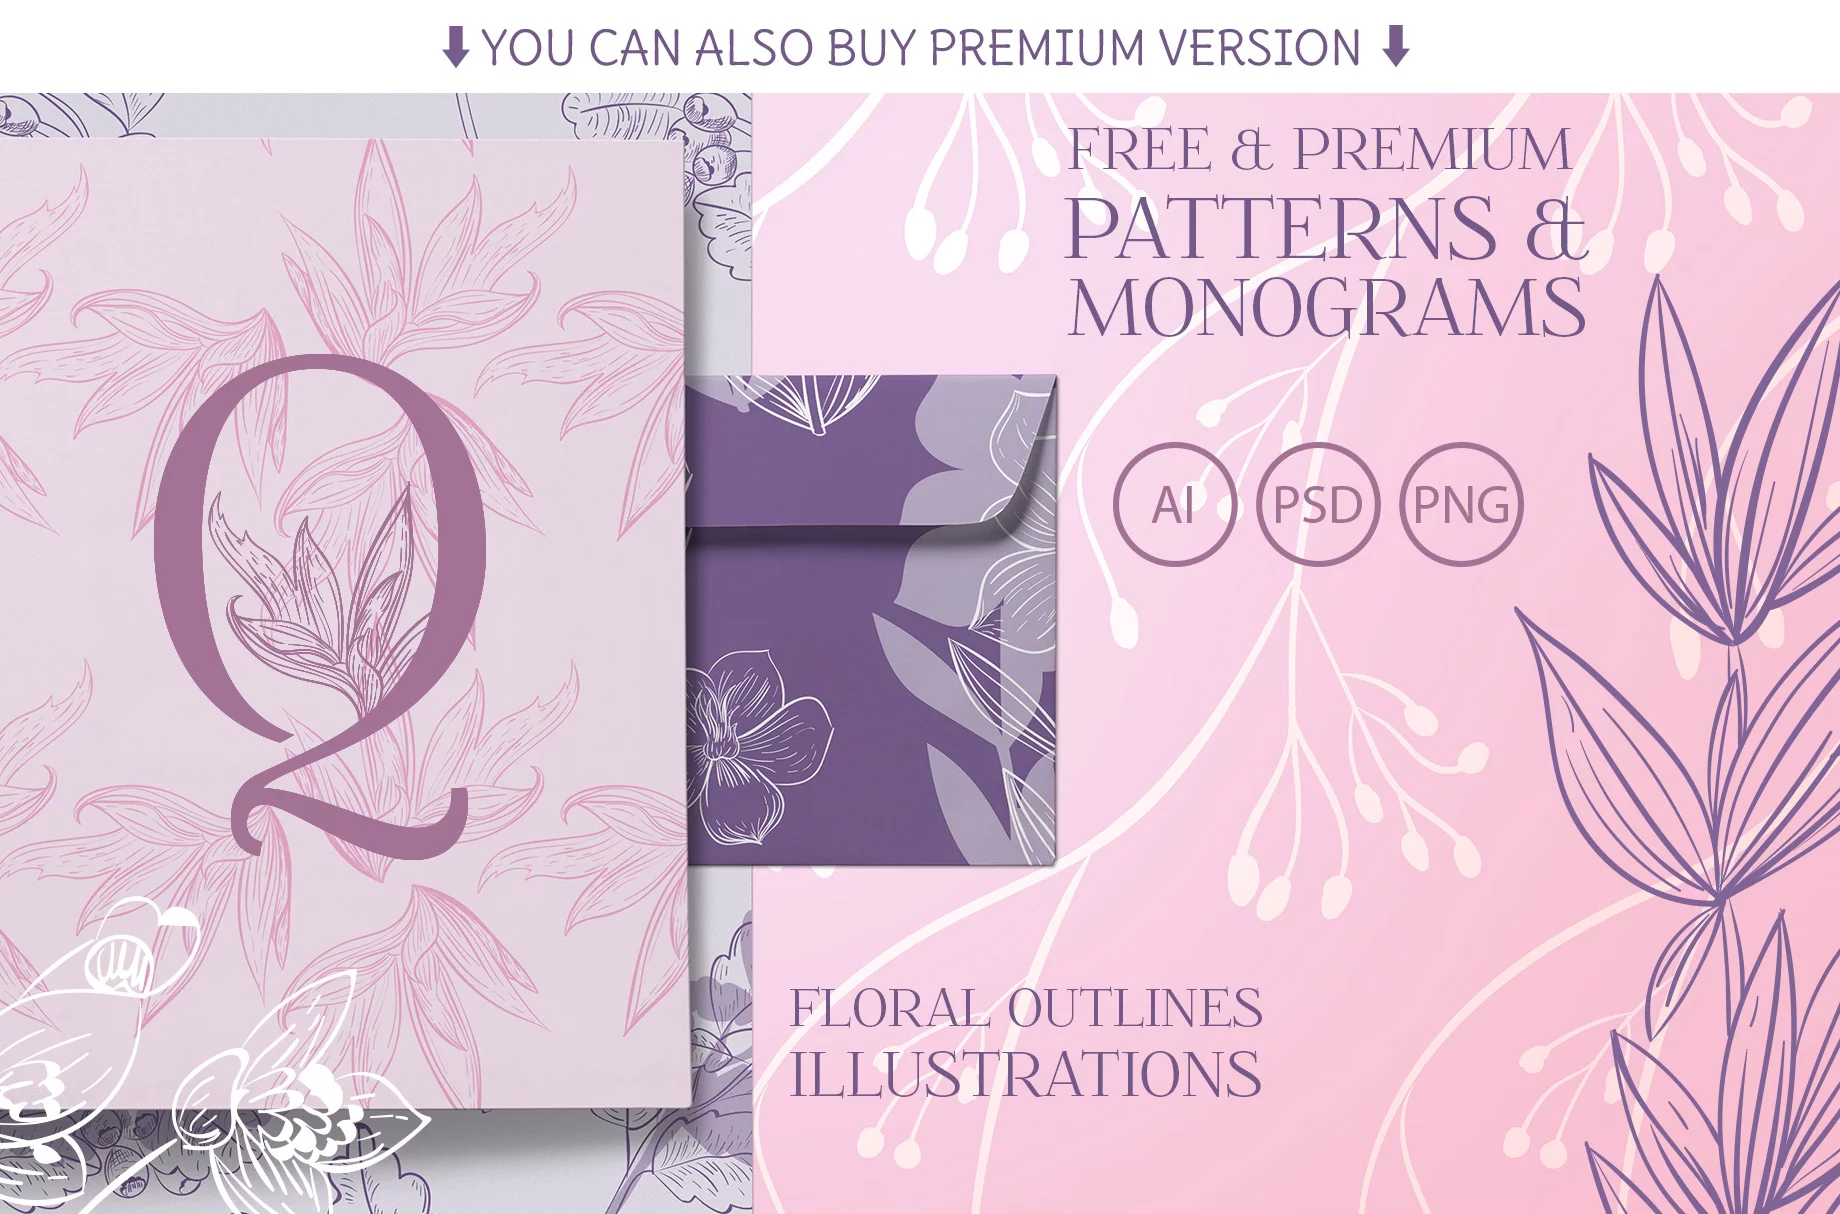 Free Floral Patterns and Monograms + Premium Version